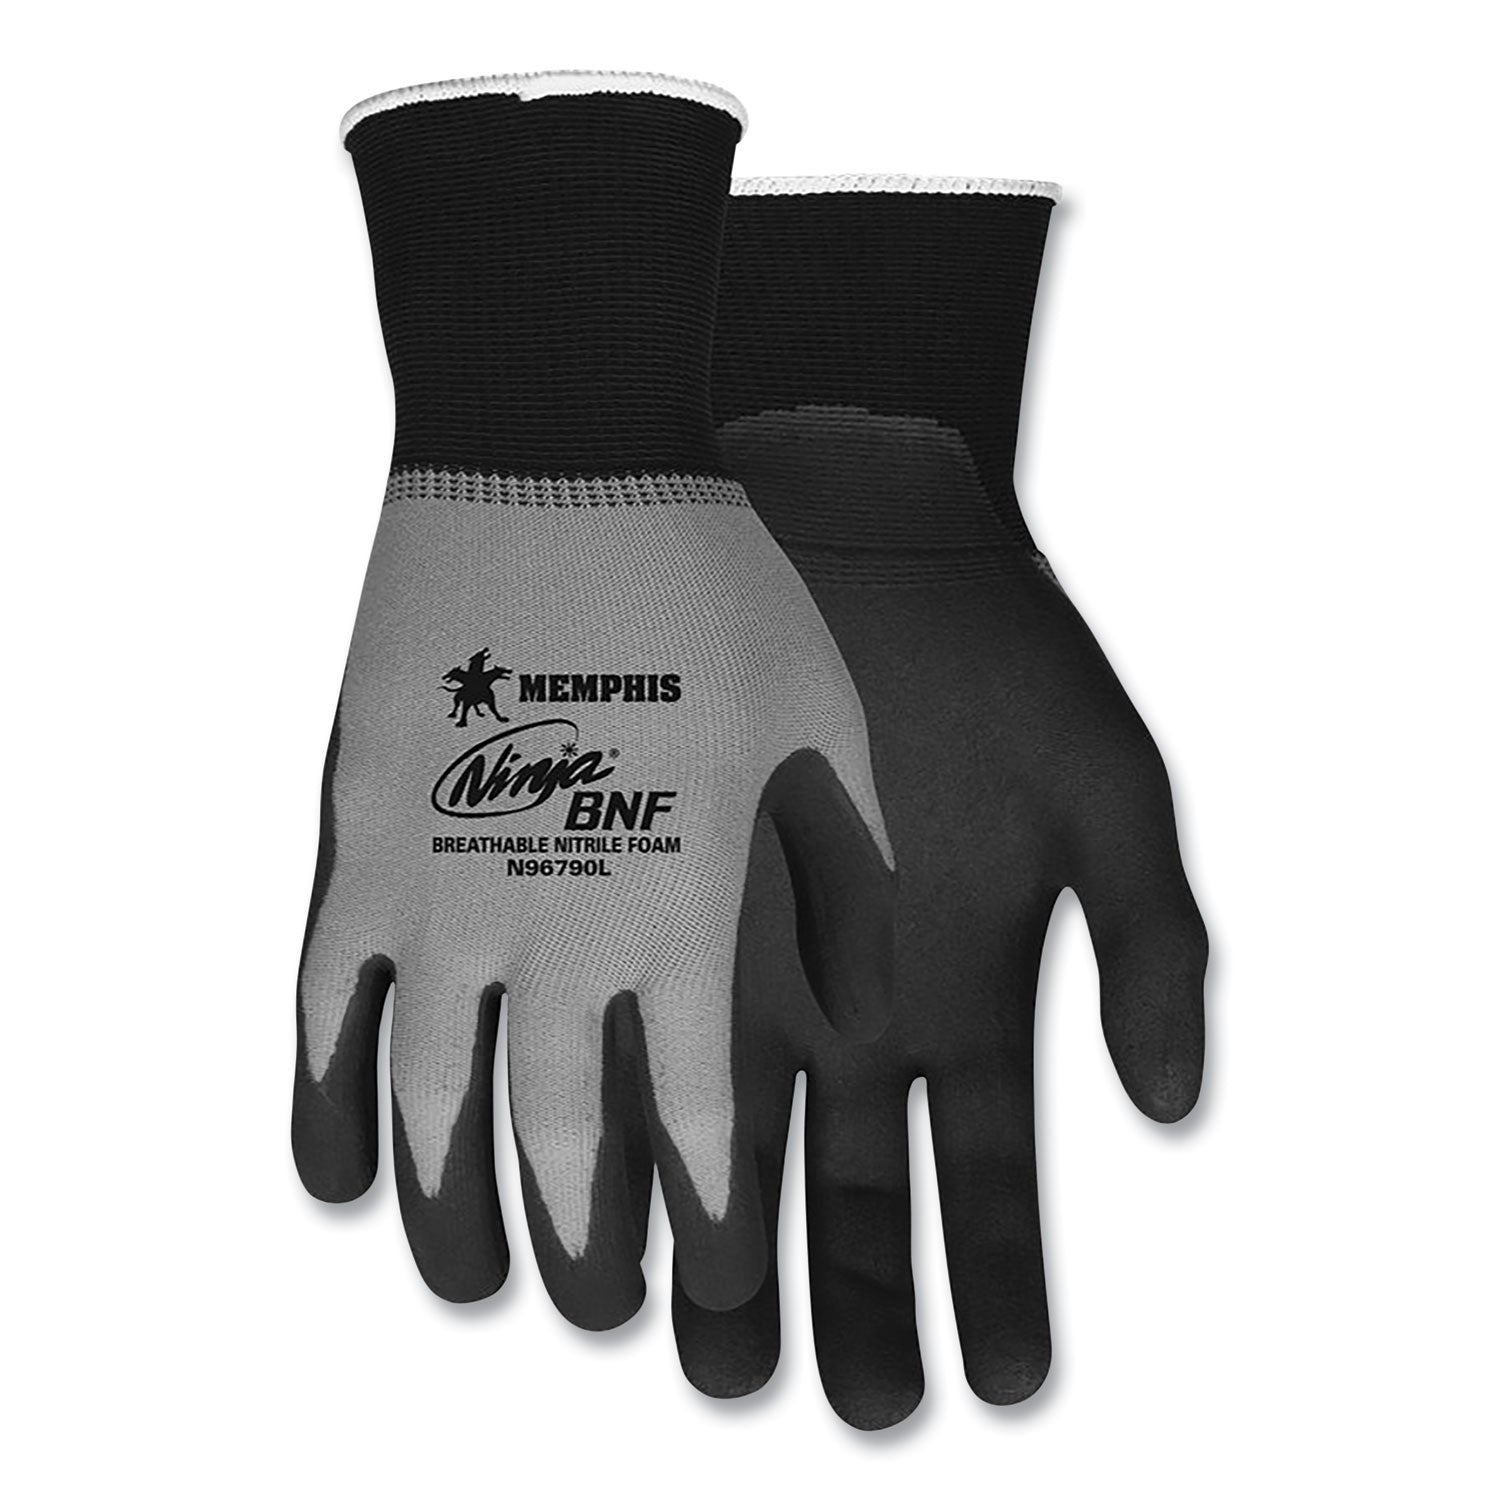 ninja-nitrile-coating-nylon-spandex-gloves-black-gray-medium-dozen_crwn96790m - 1